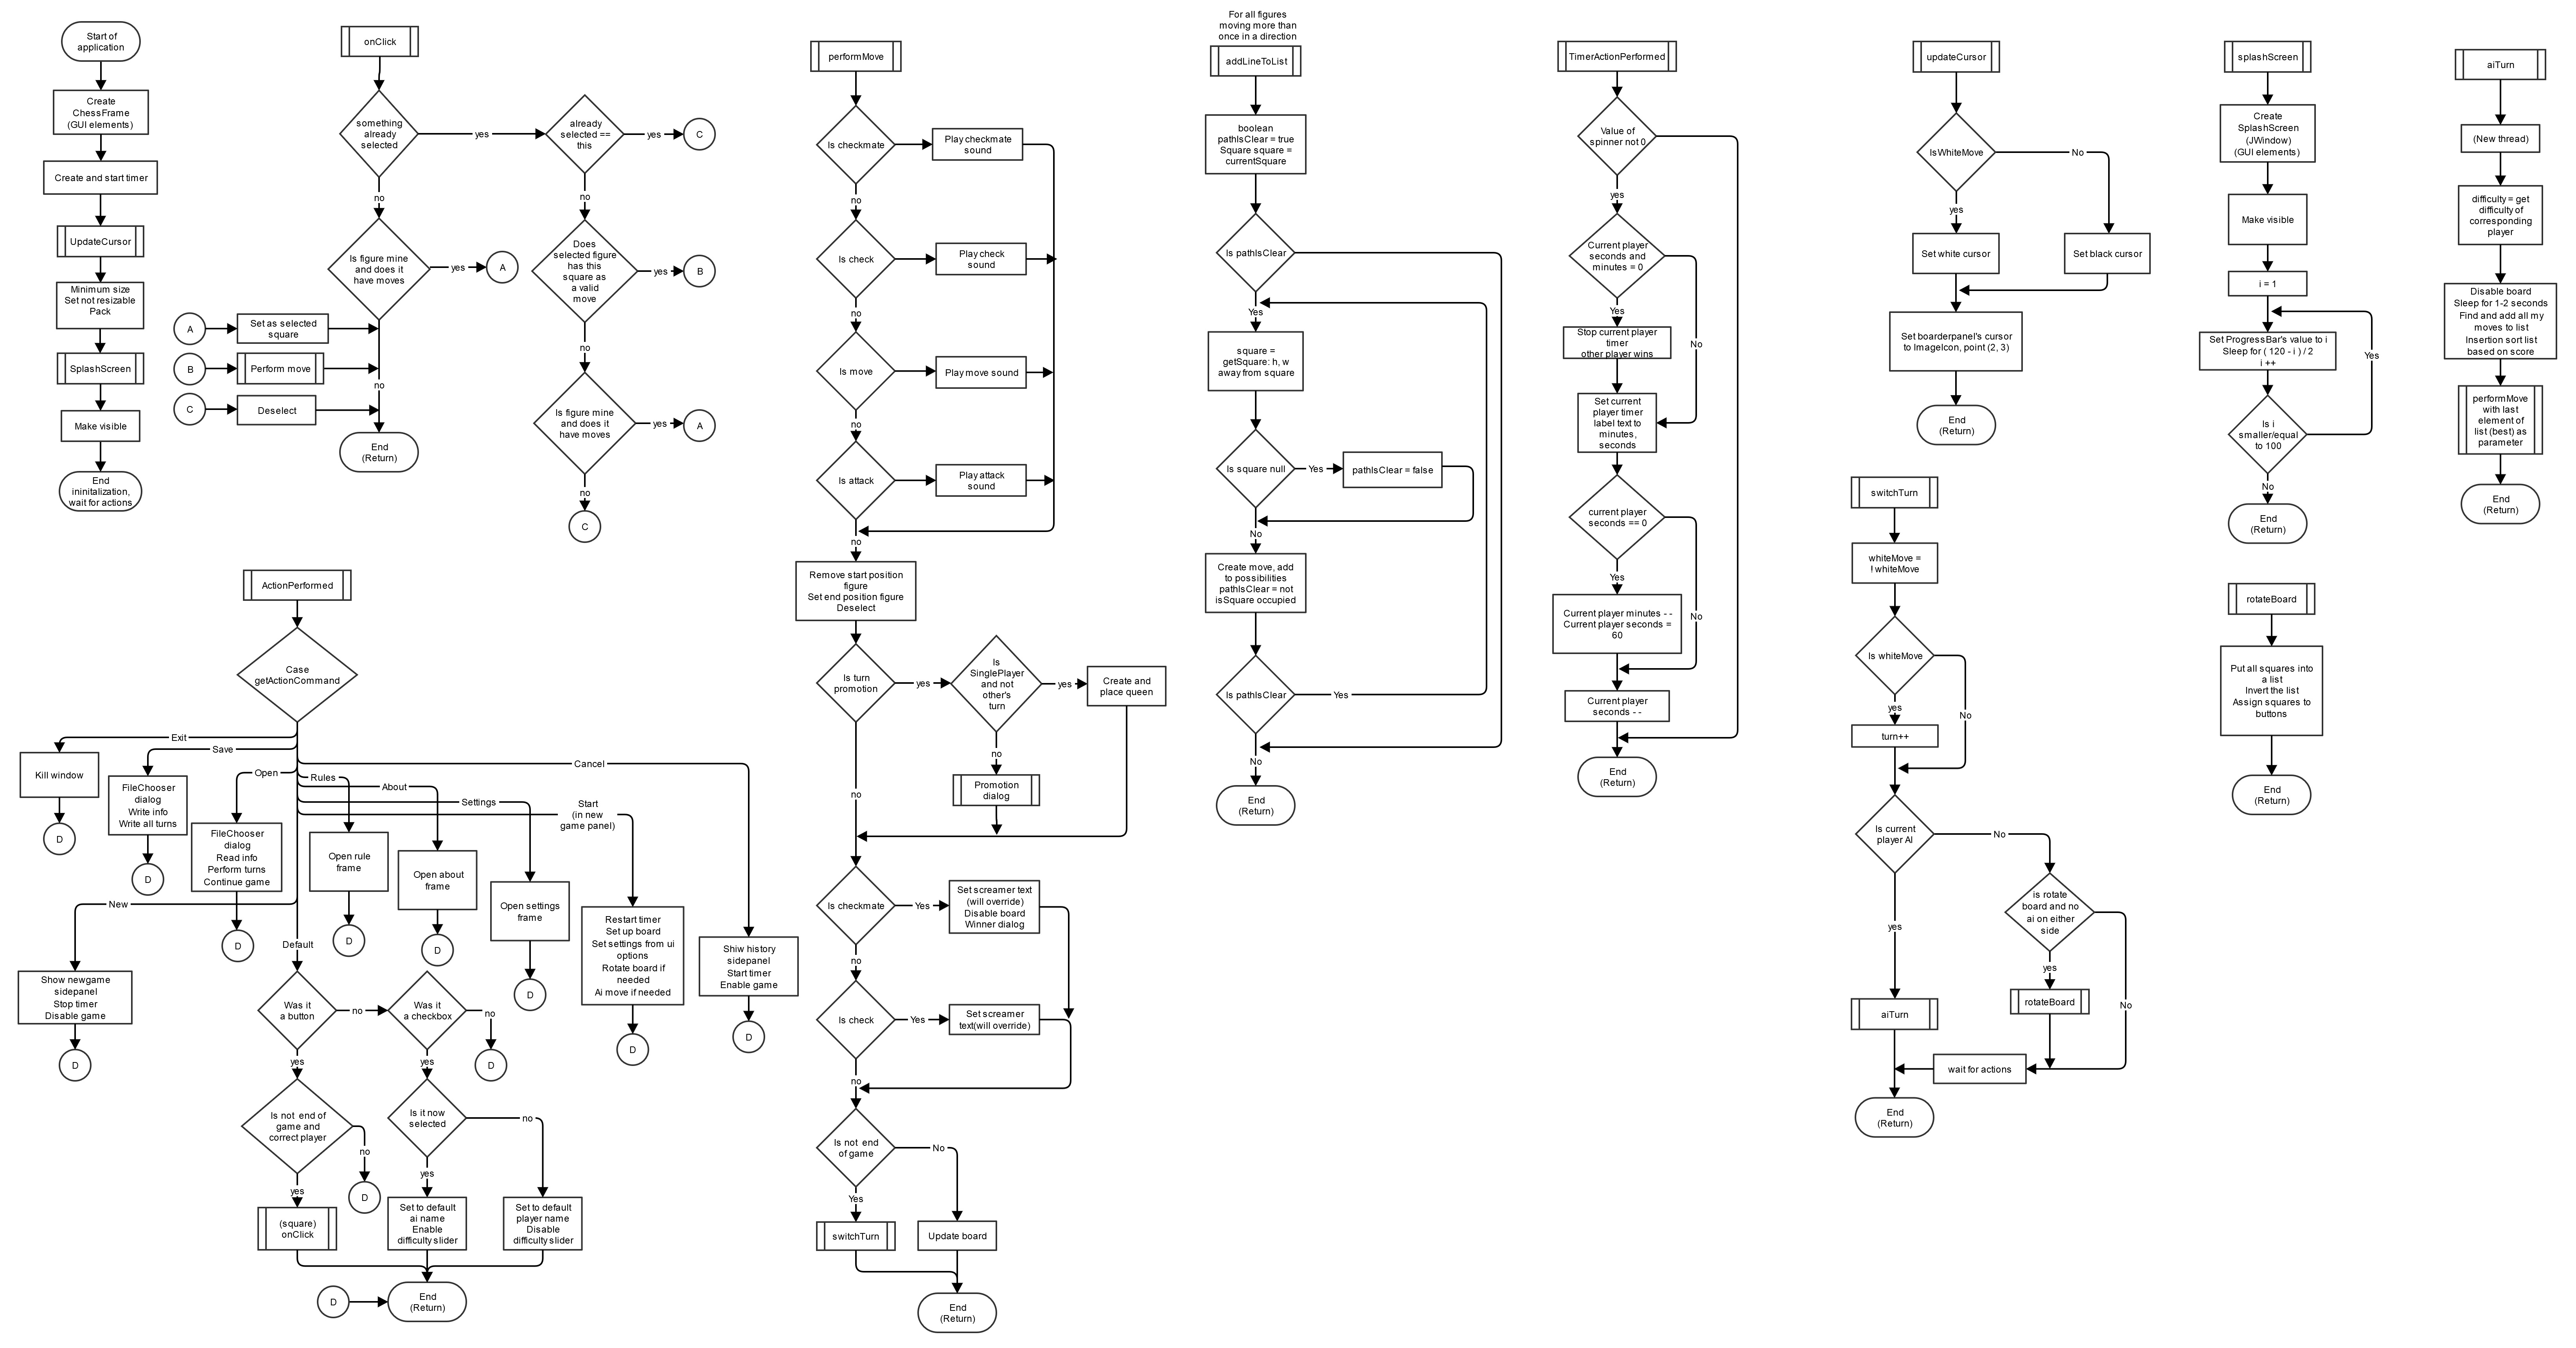 Chess engine general design  Download Scientific Diagram